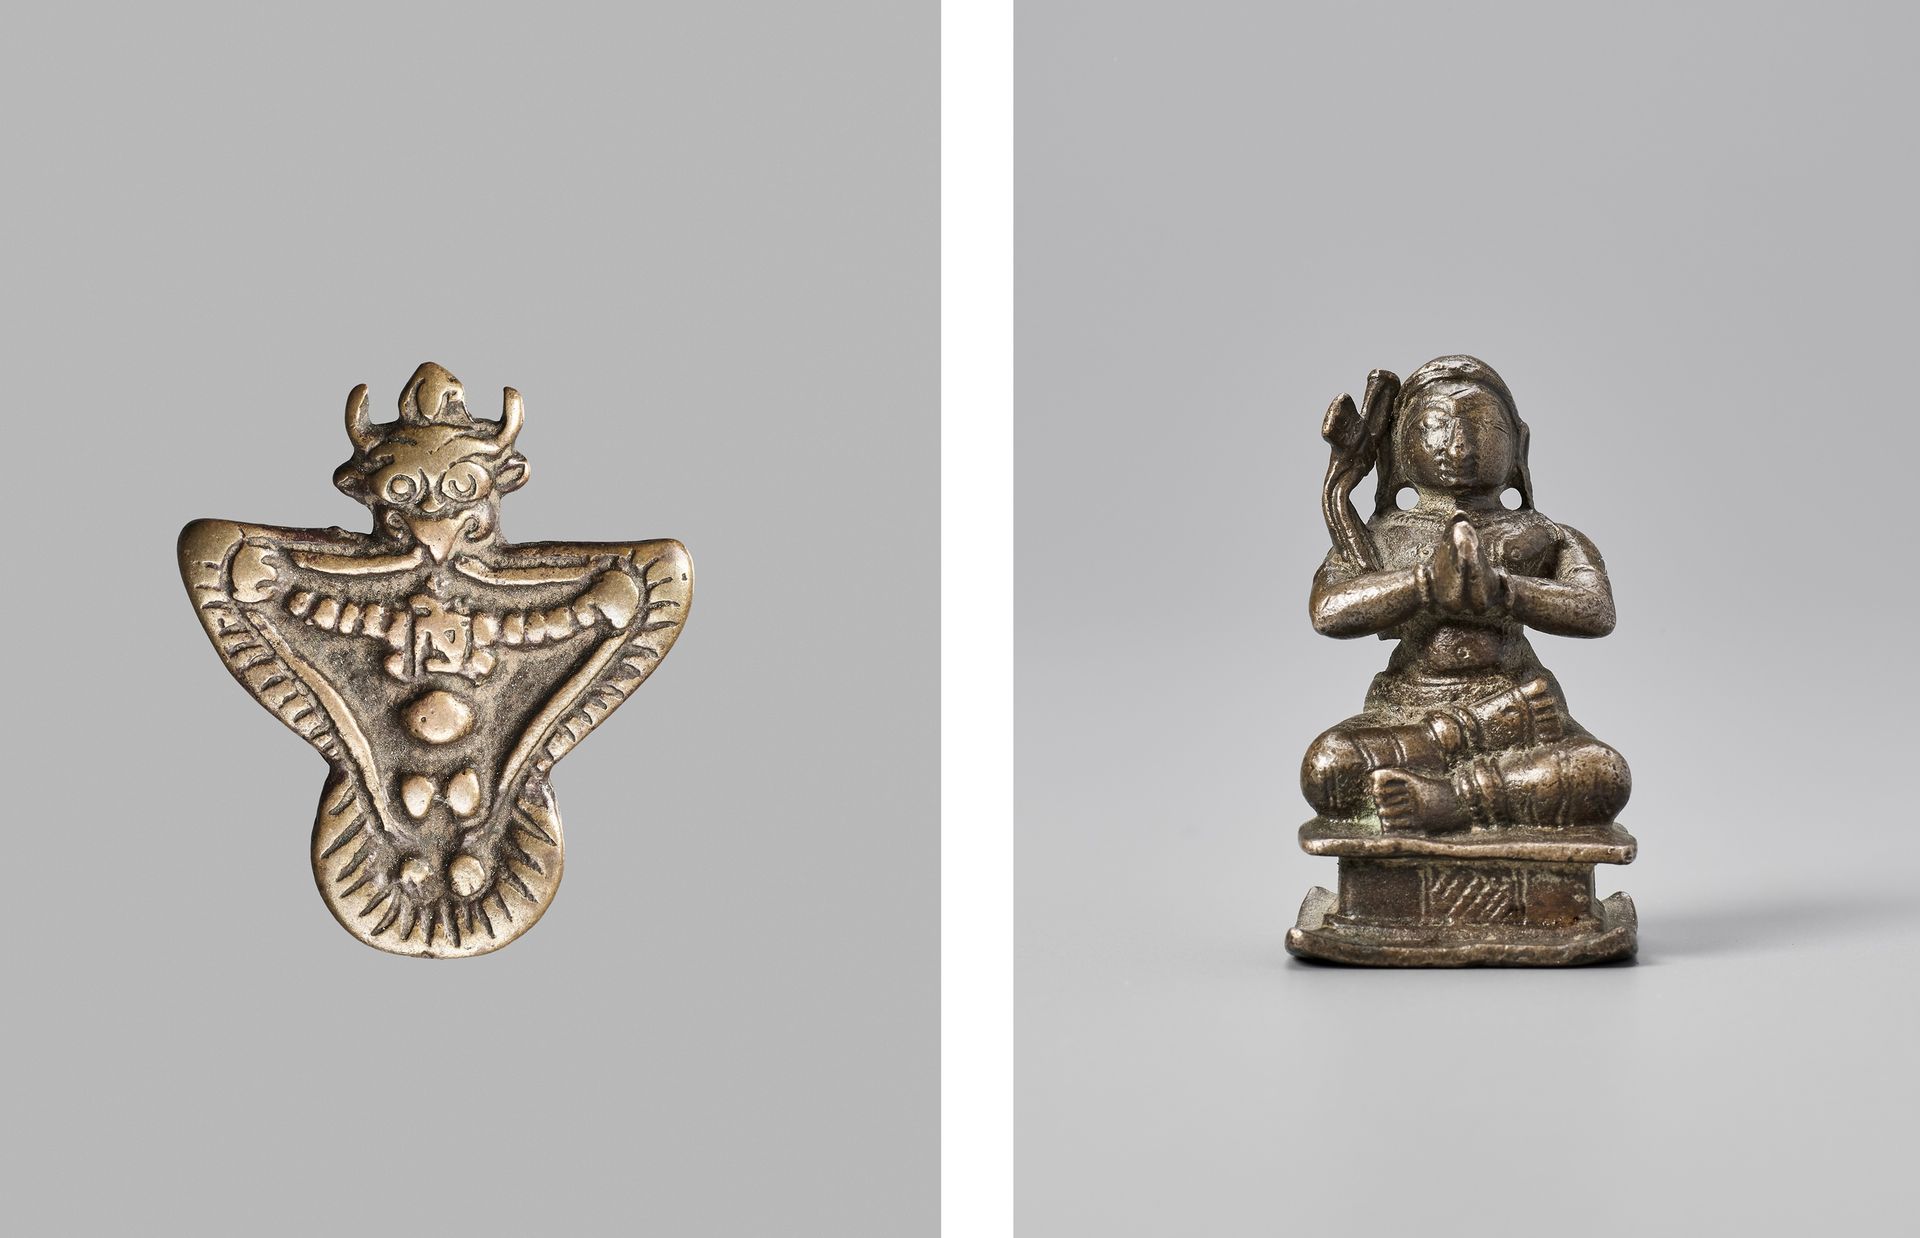 TWO SMALL INDIAN BRONZE FIGURES, 19TH CENTURY 两件小型的印度铜像，19世纪
印度。一件青铜器描绘的是放大的迦楼罗，&hellip;